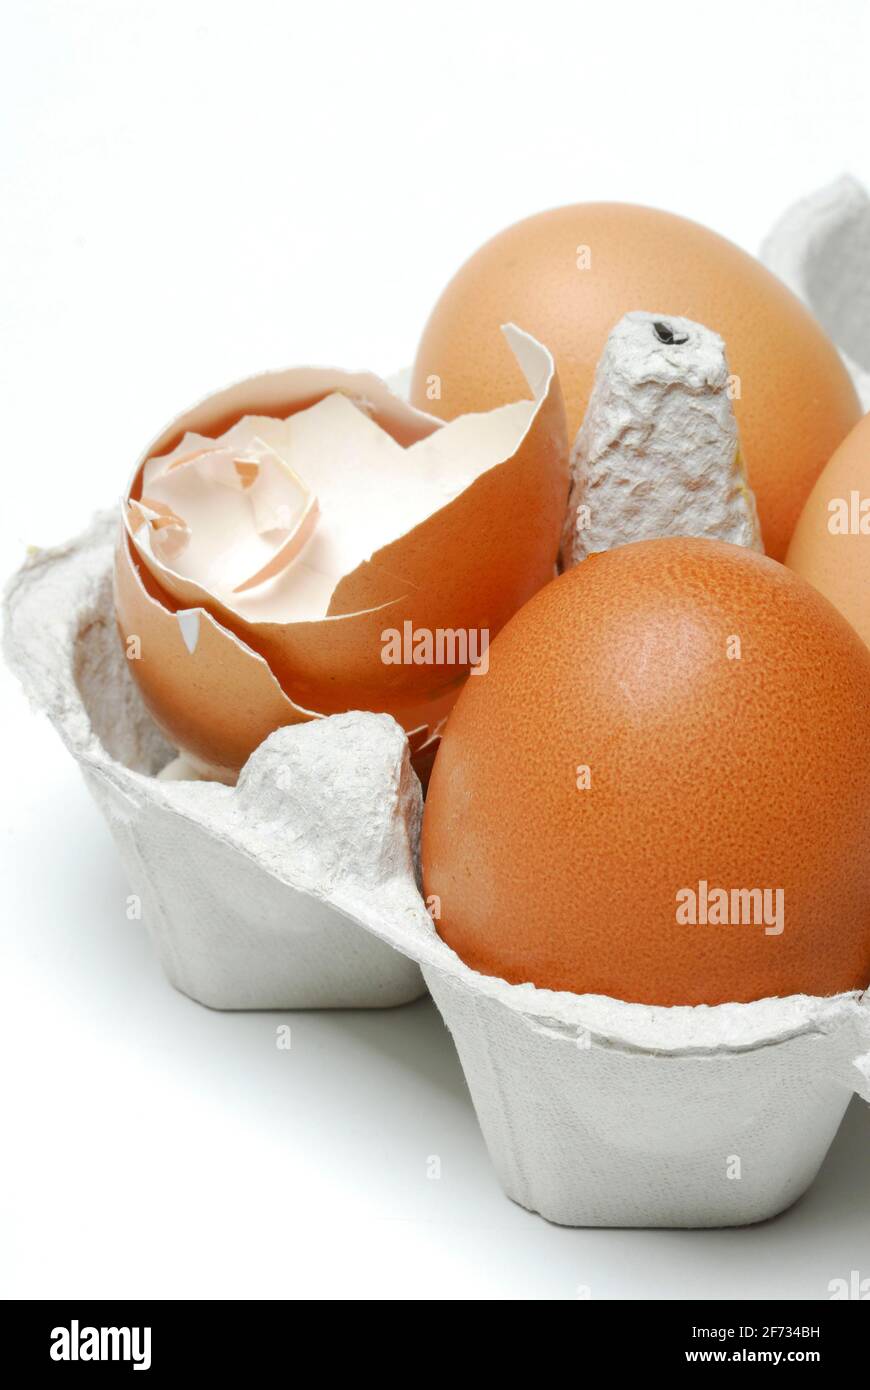 Uova di gallina, gusci d'uovo, uova di gallina Foto Stock